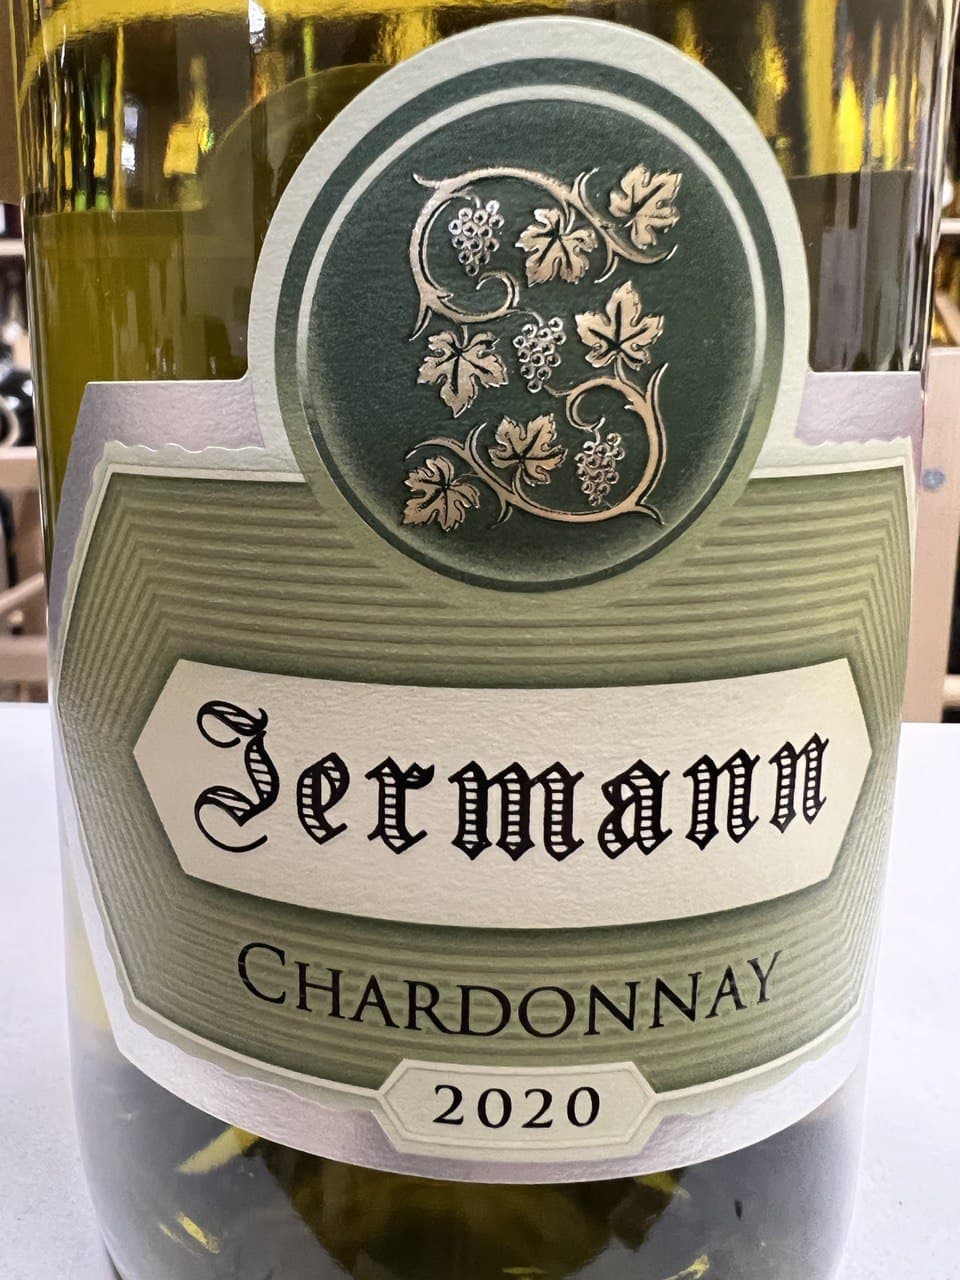 Jermann Chardonnay 2020